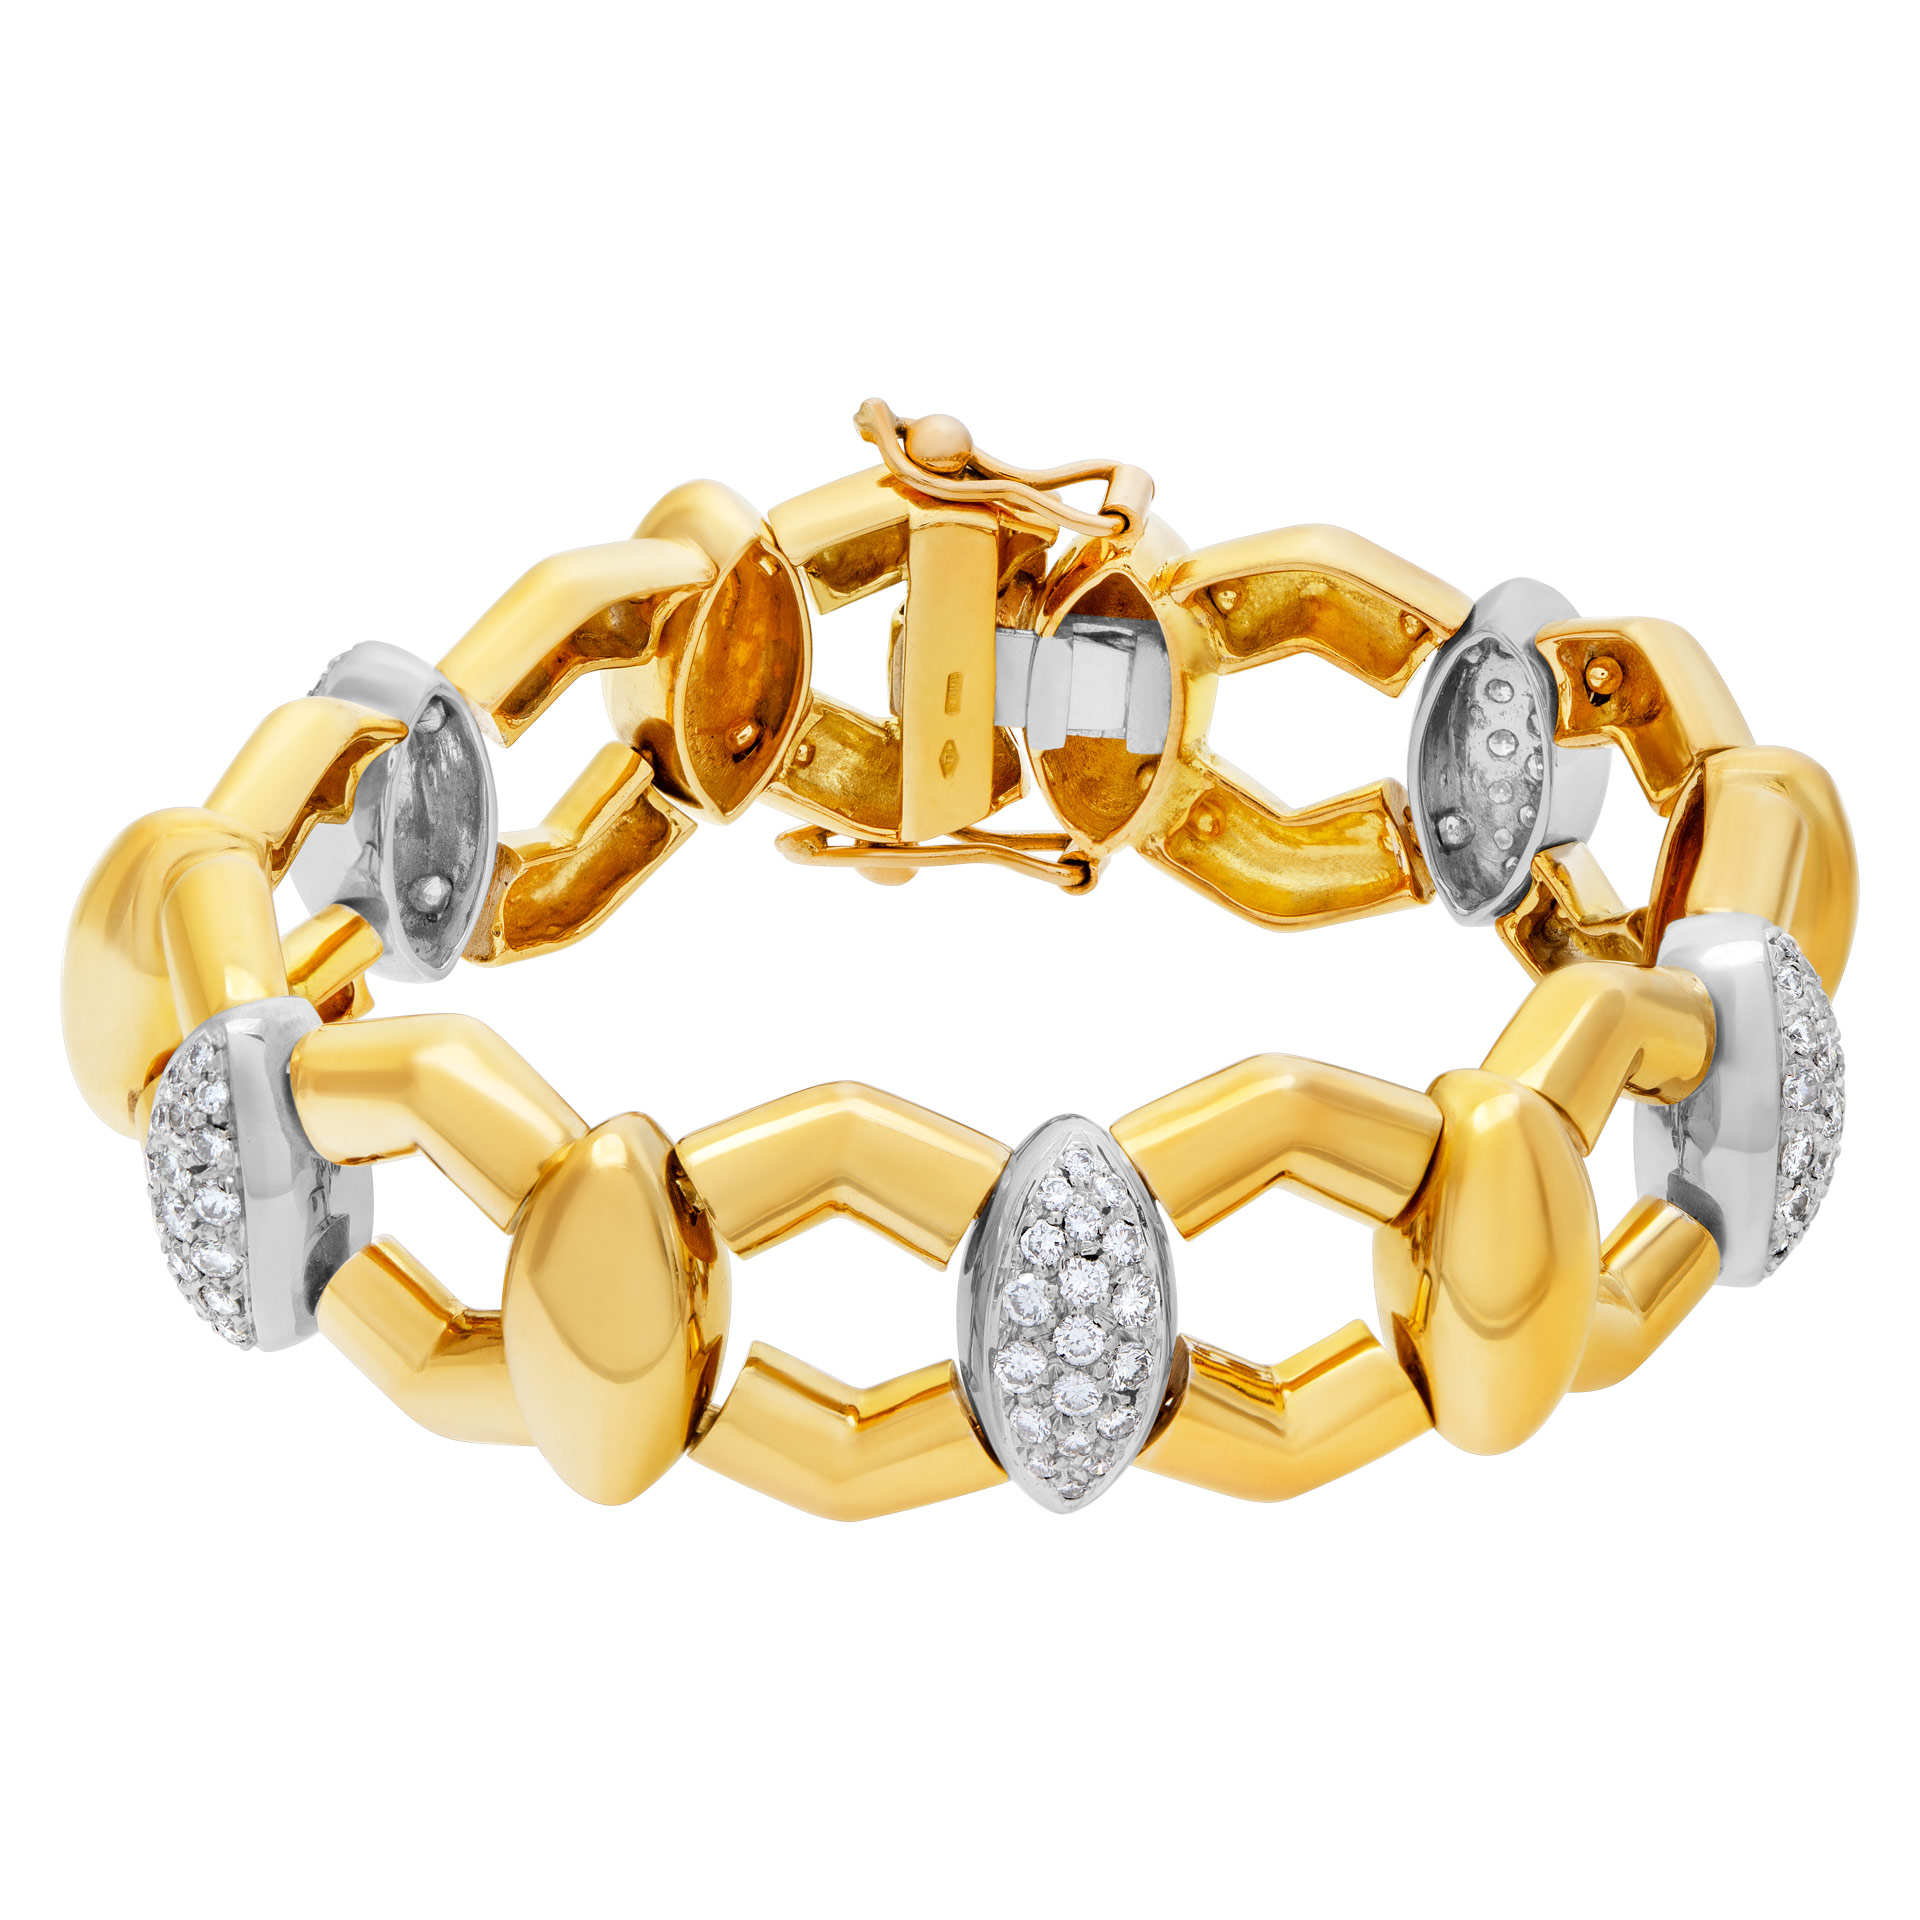 Diamond bracelet set in 18k yellow gold approximately 2.35 carats in diamonds